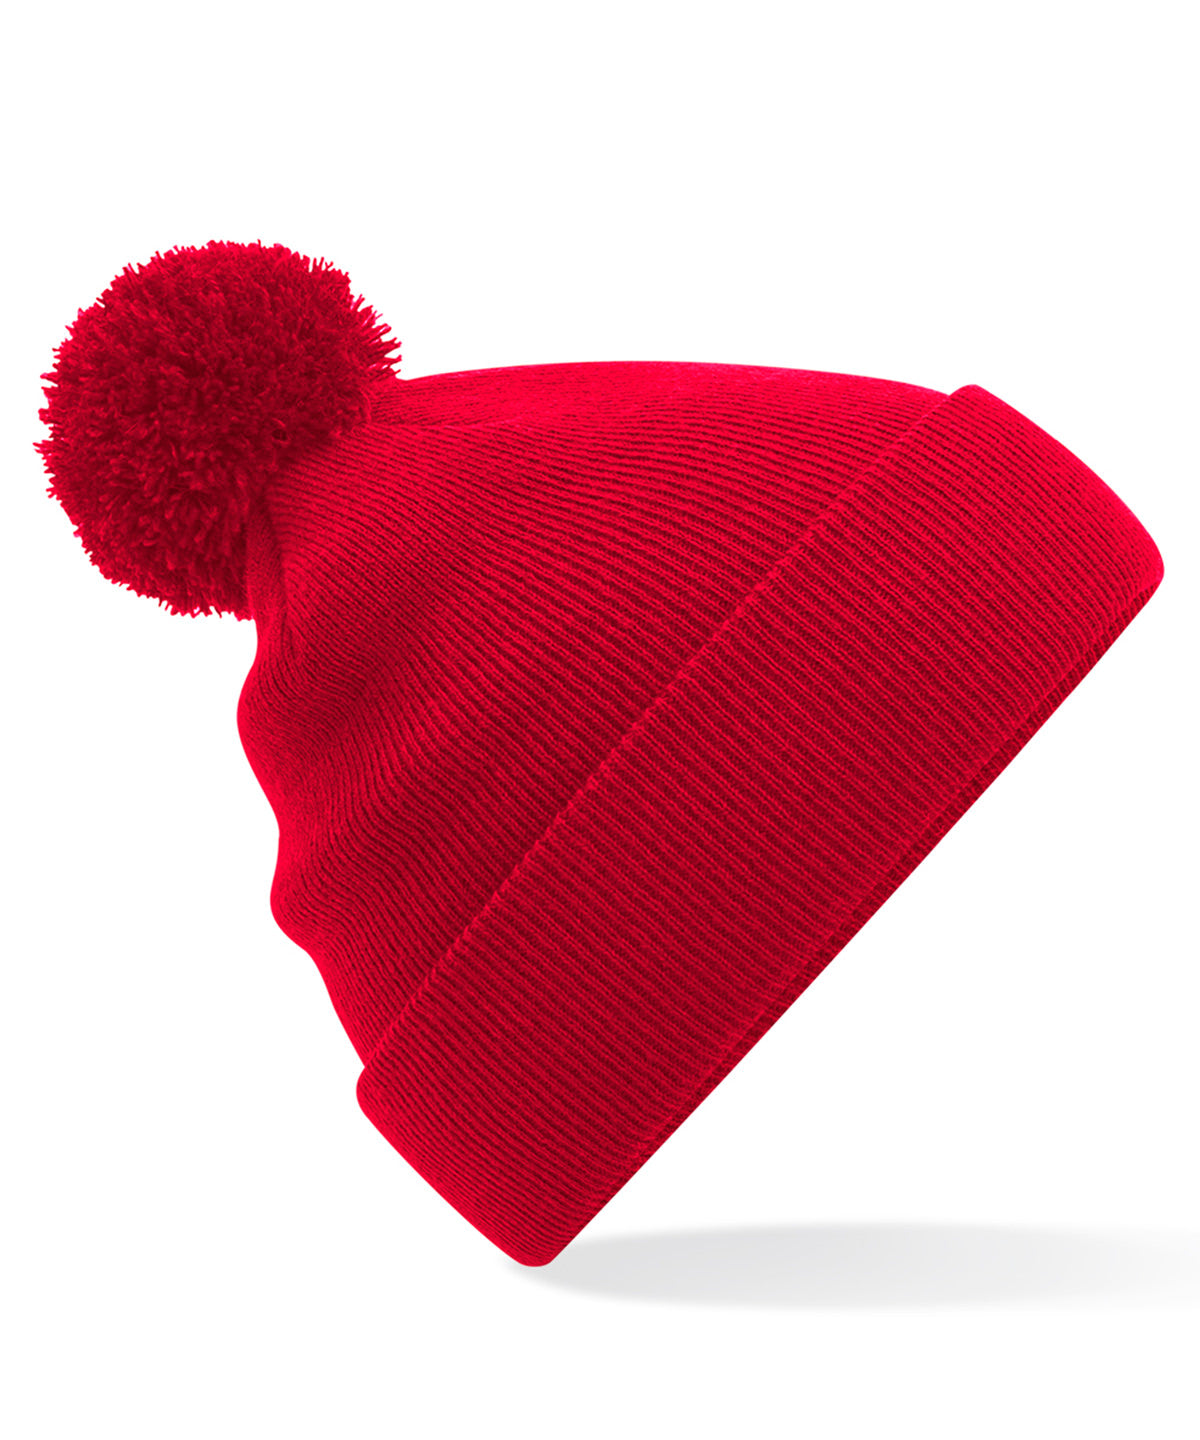 Personalised Hats - Mid Red Beechfield Junior original pom pom beanie